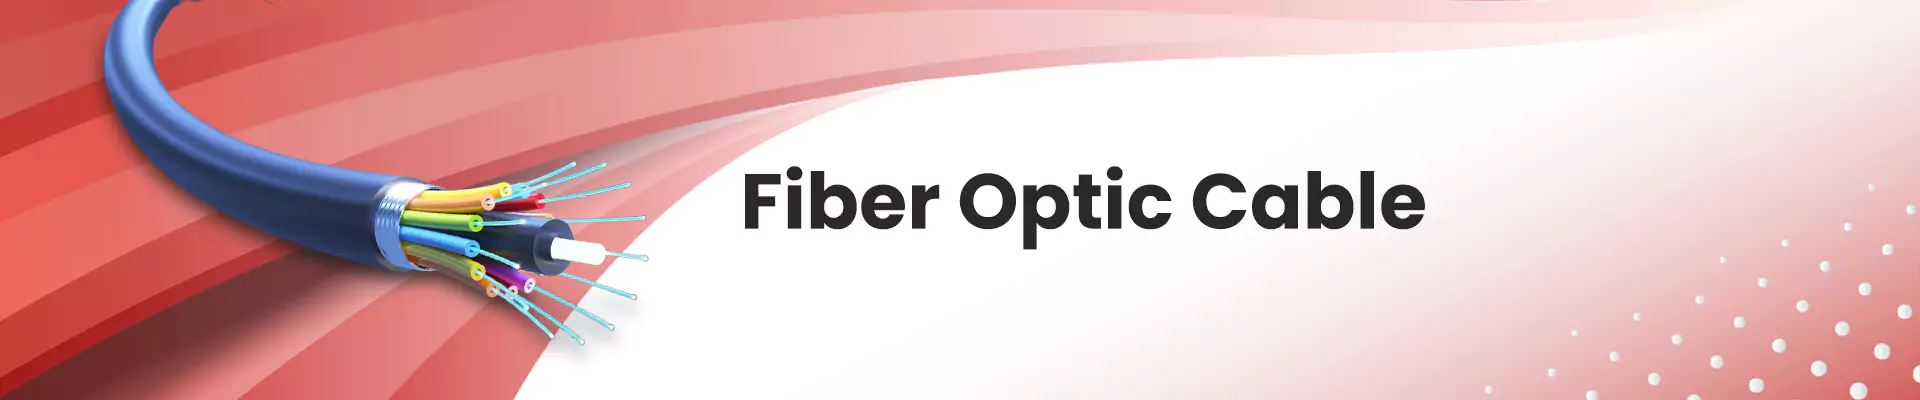 Fiber Optic Cable Supplier, Distributor & Dealer in Dubai UAE.- Instant ...